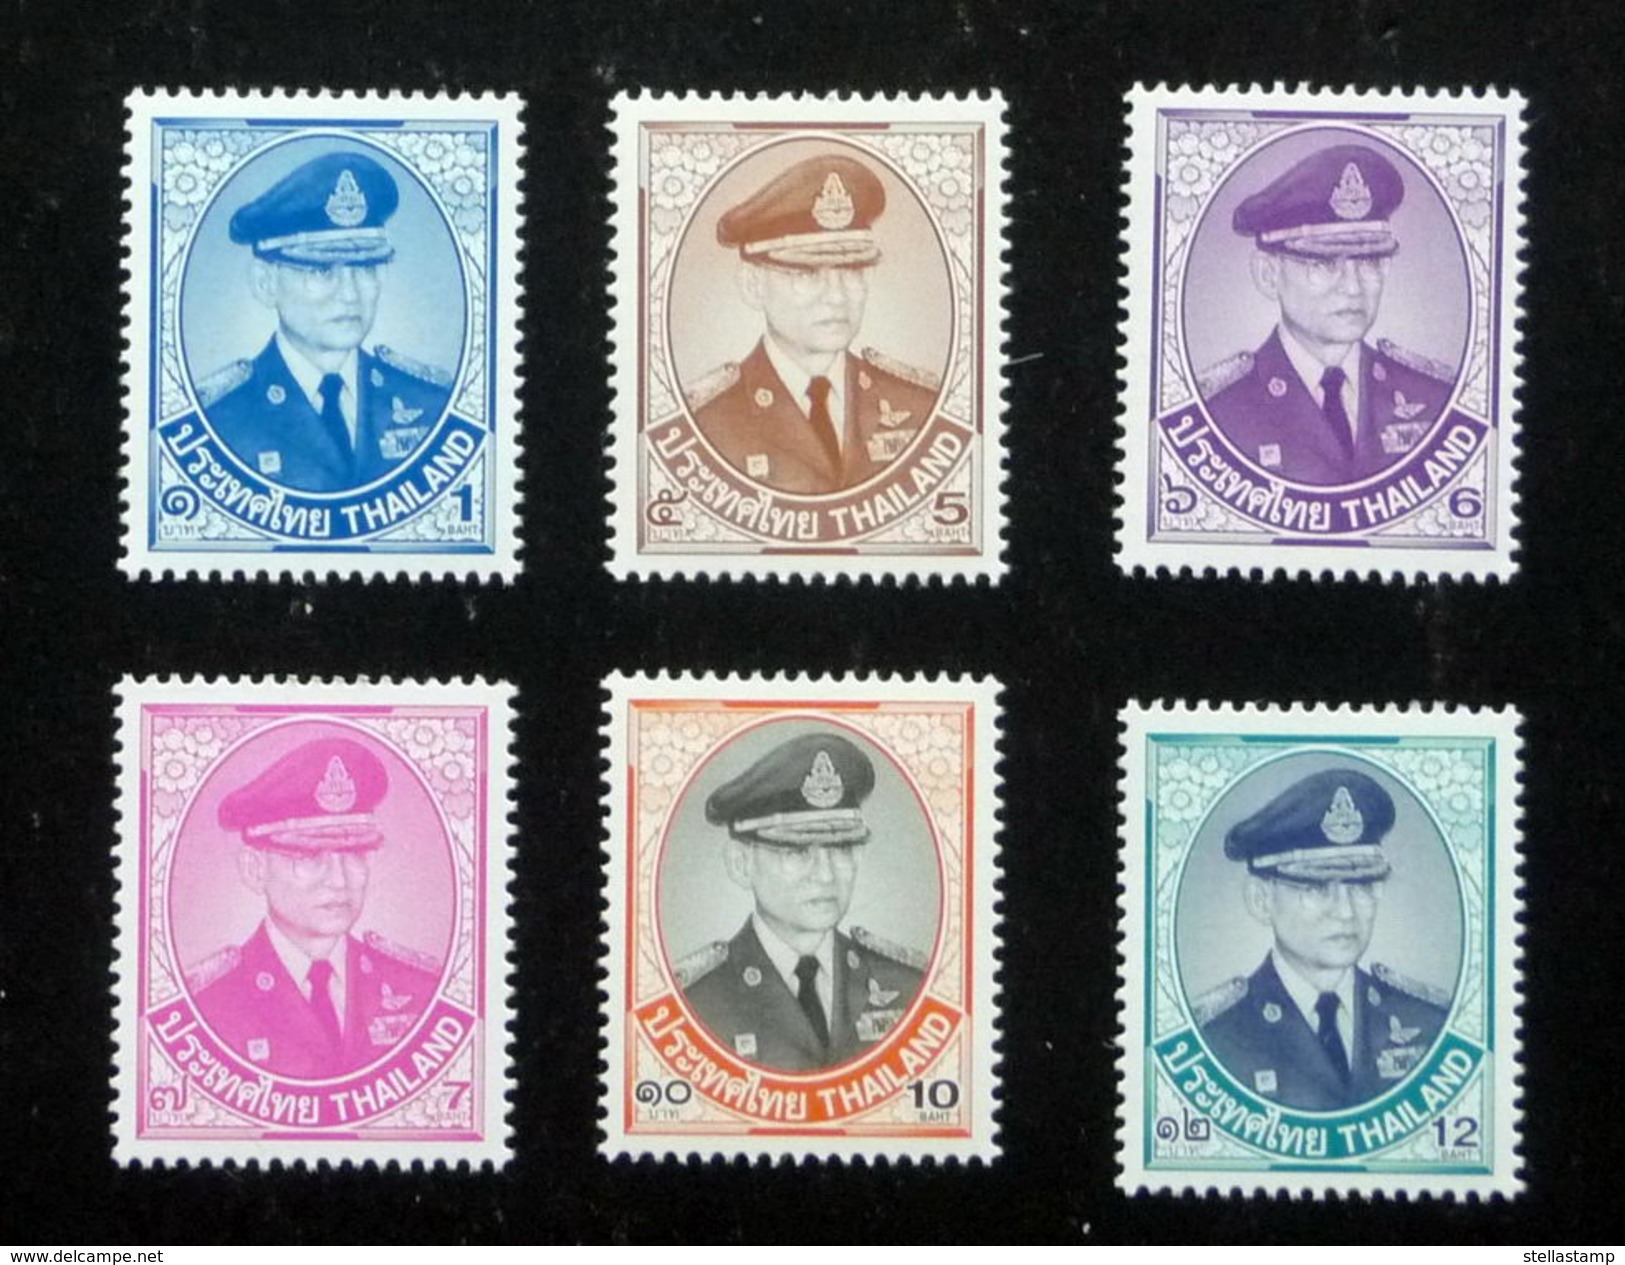 Thailand Stamp Definitive King Rama 9 10th Series - Thai British Printing Company - Thailand